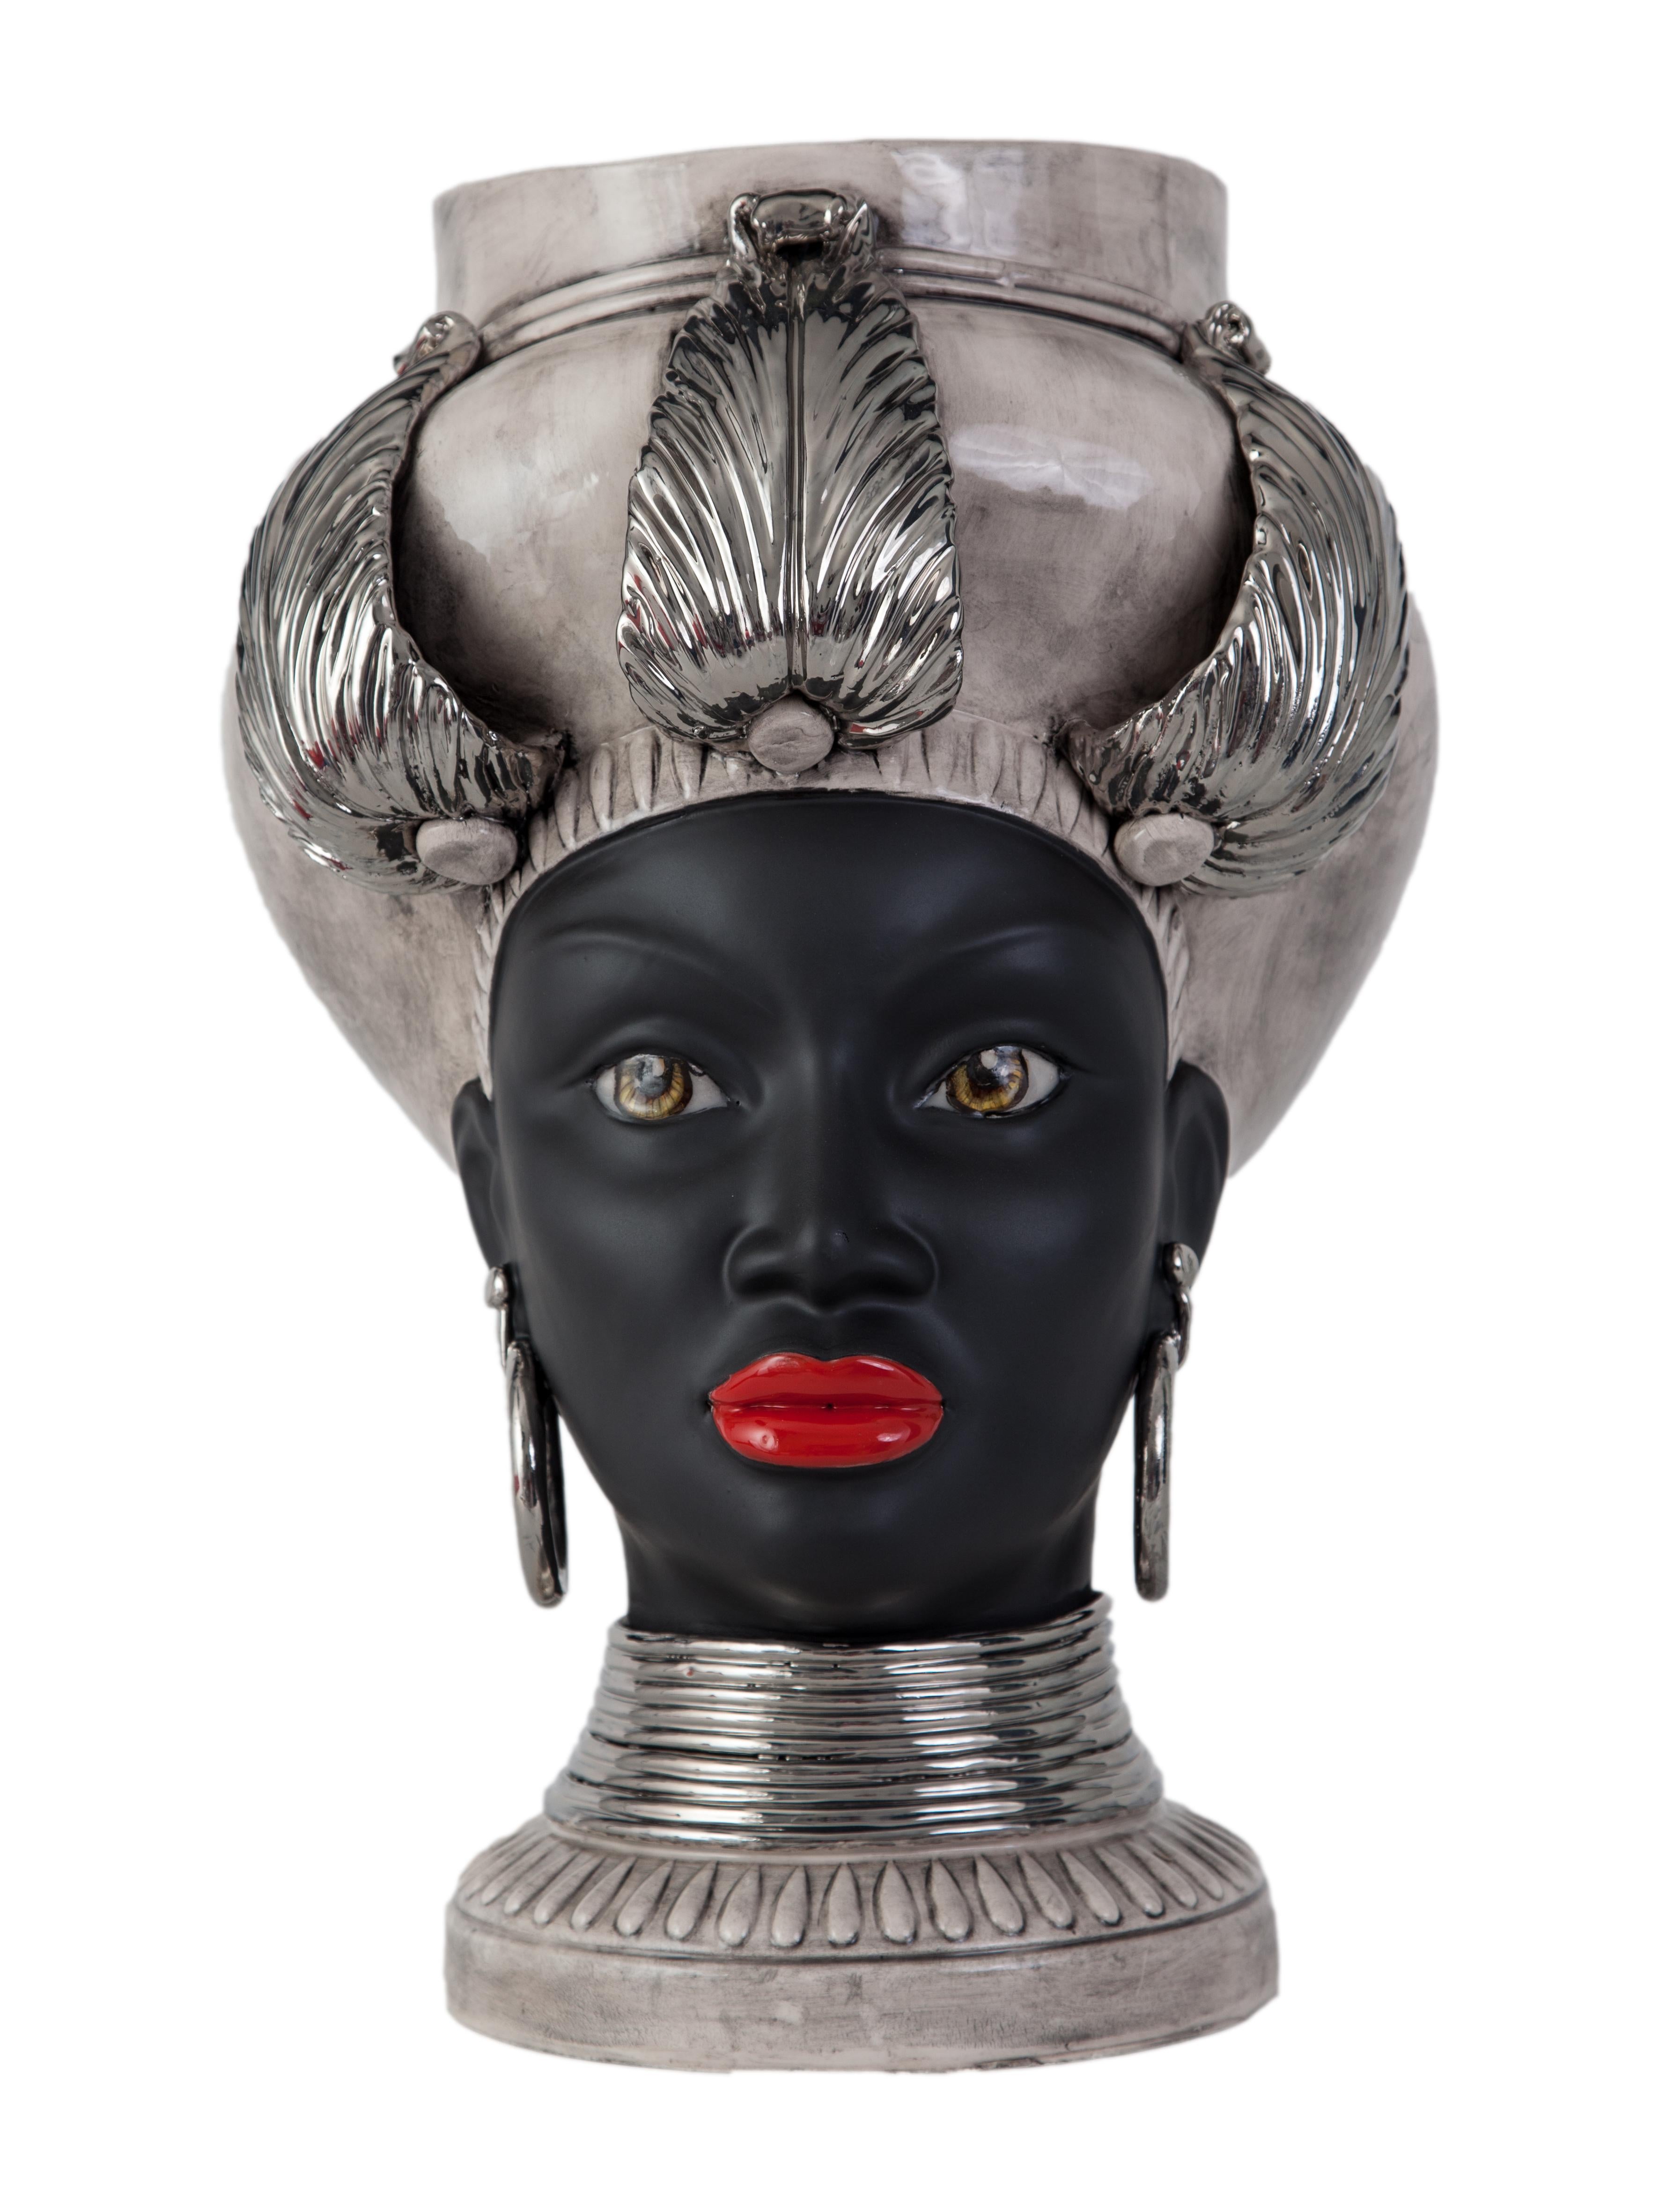 ISIDE I11, Moorish Head, Handmade in Sicily, 2021, Centerpiece, Size S For Sale 11